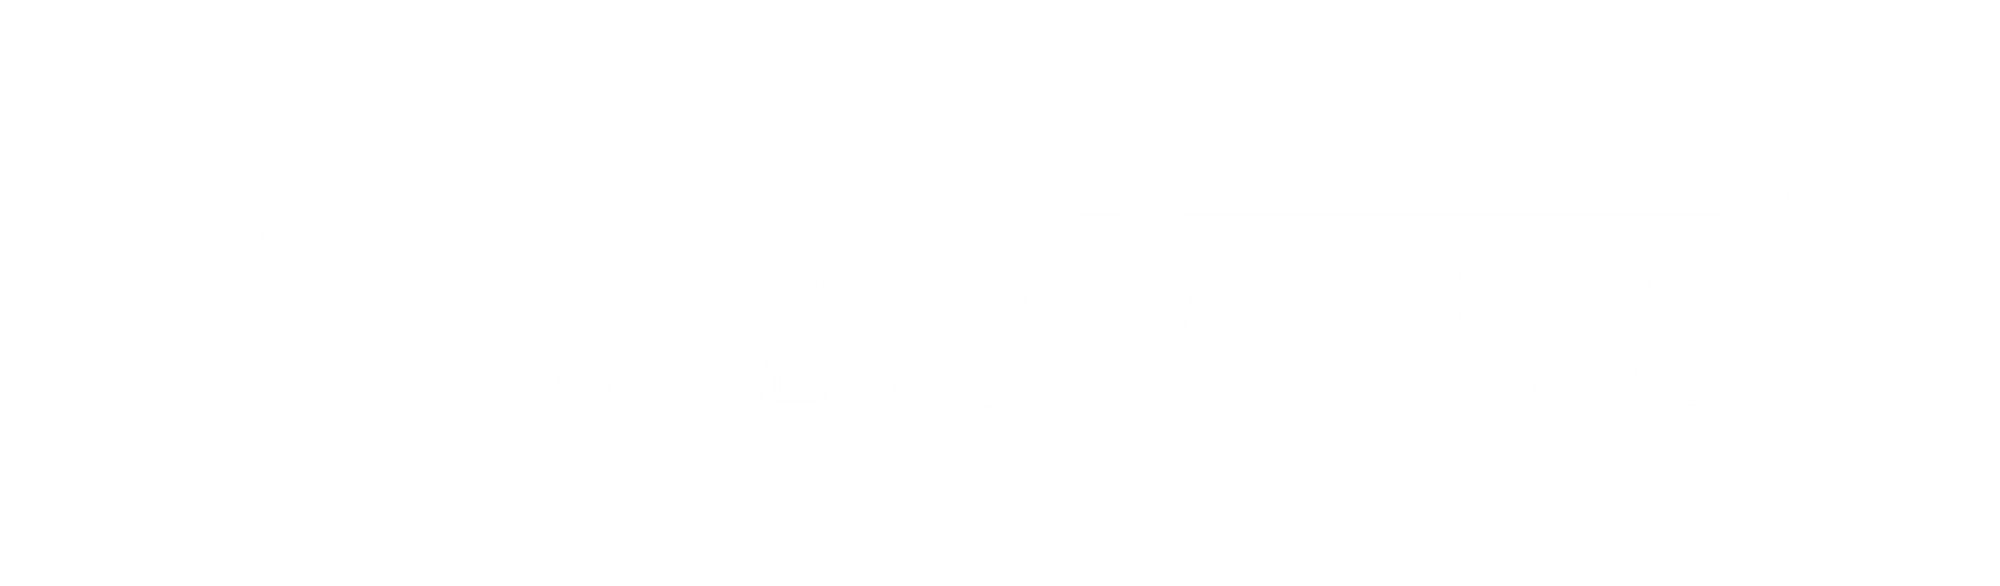 Thermotraks logo in all white